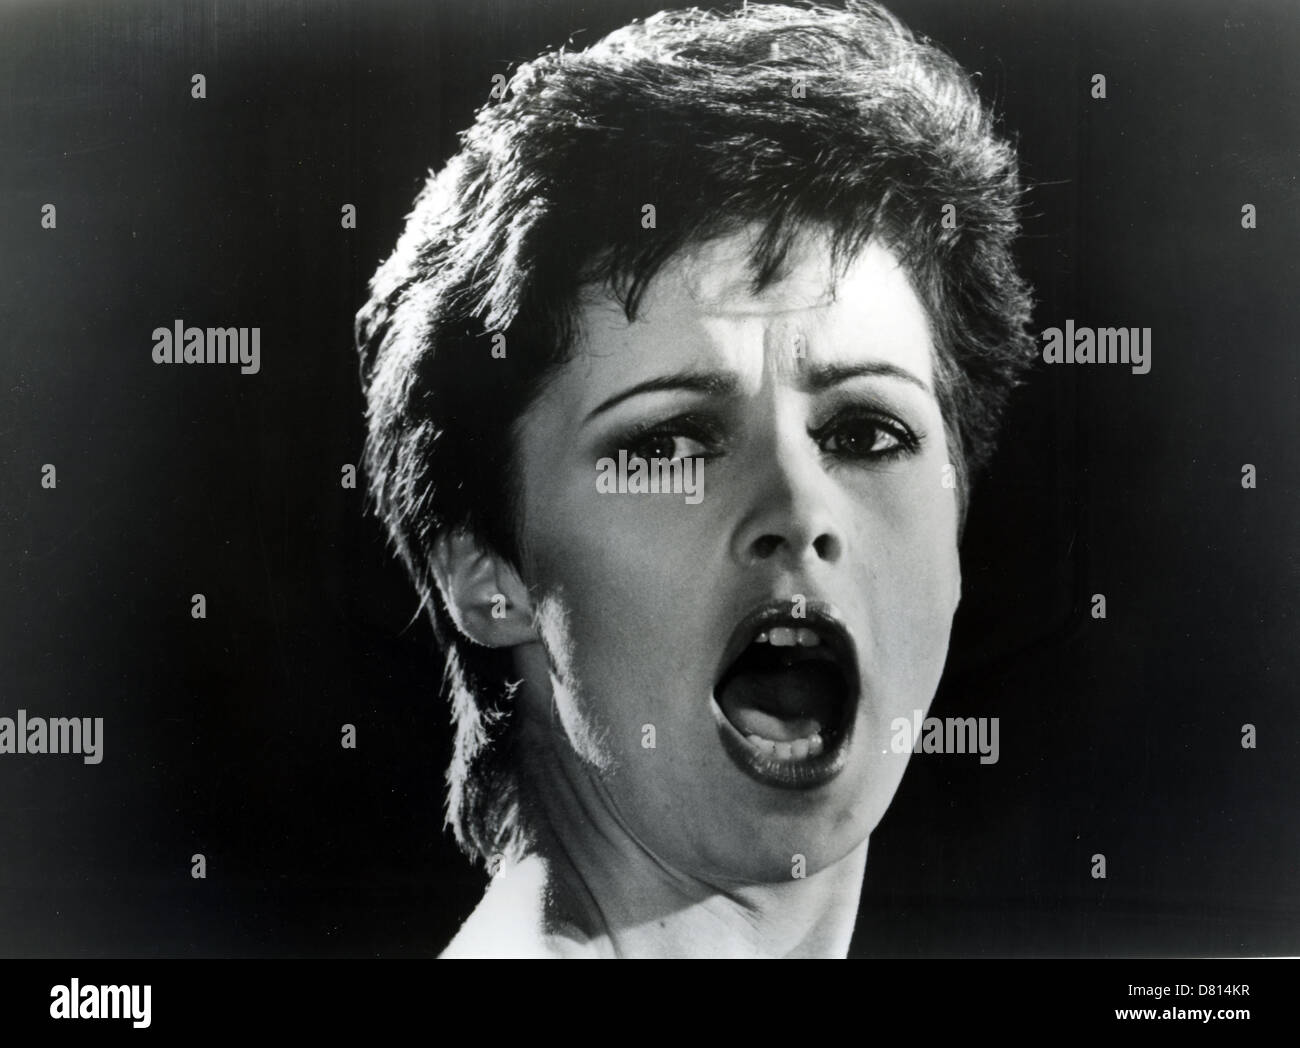 SHEENA EASTON  Promotional photo of Scottish pop singer about 1981 Stock Photo